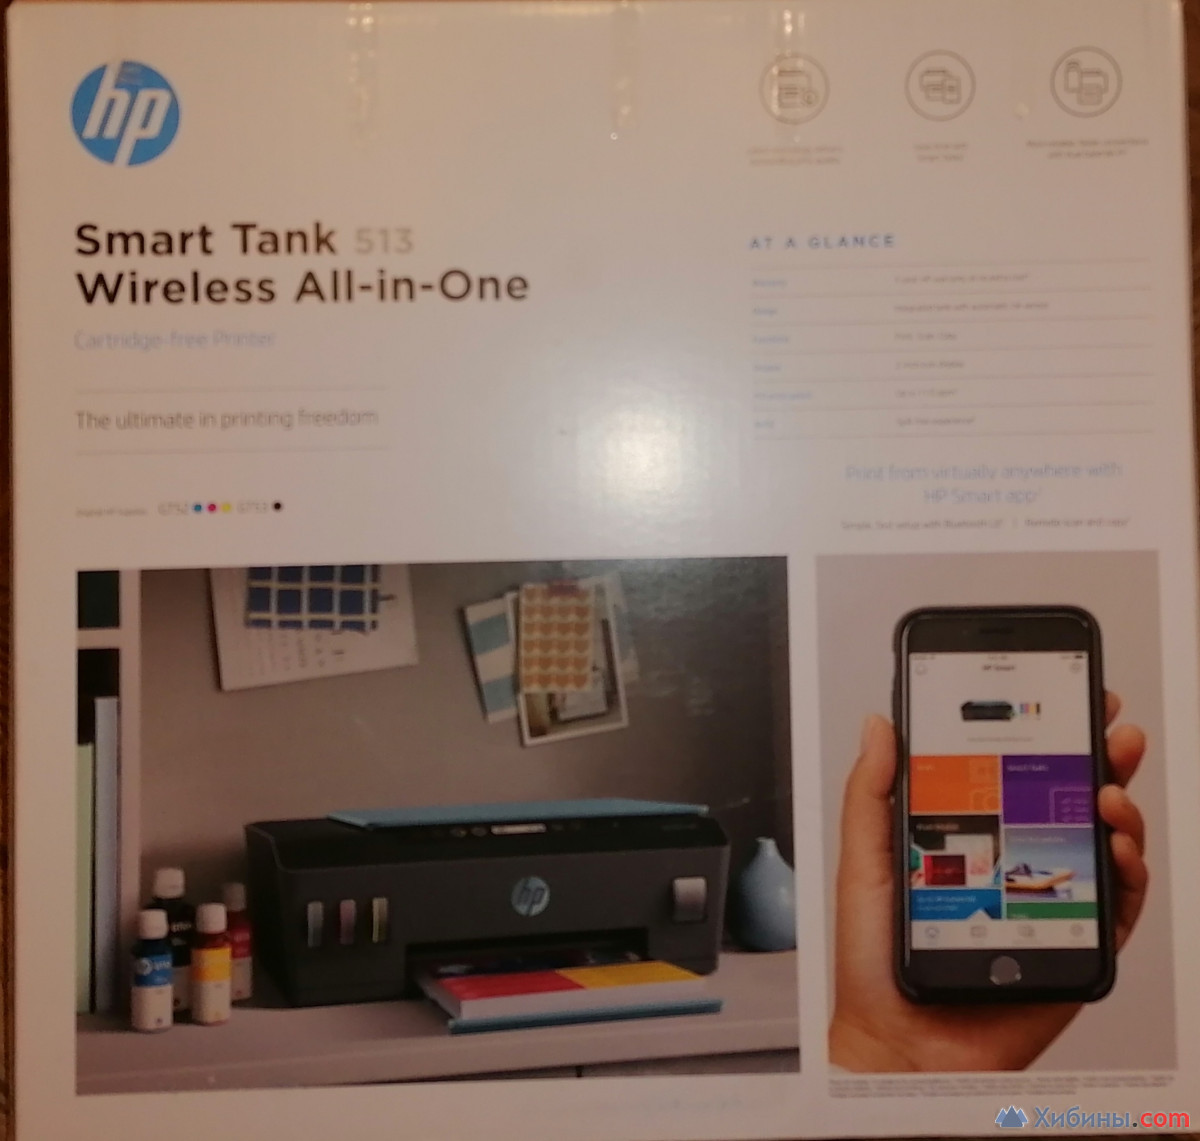 мфу HP Smart tank 513